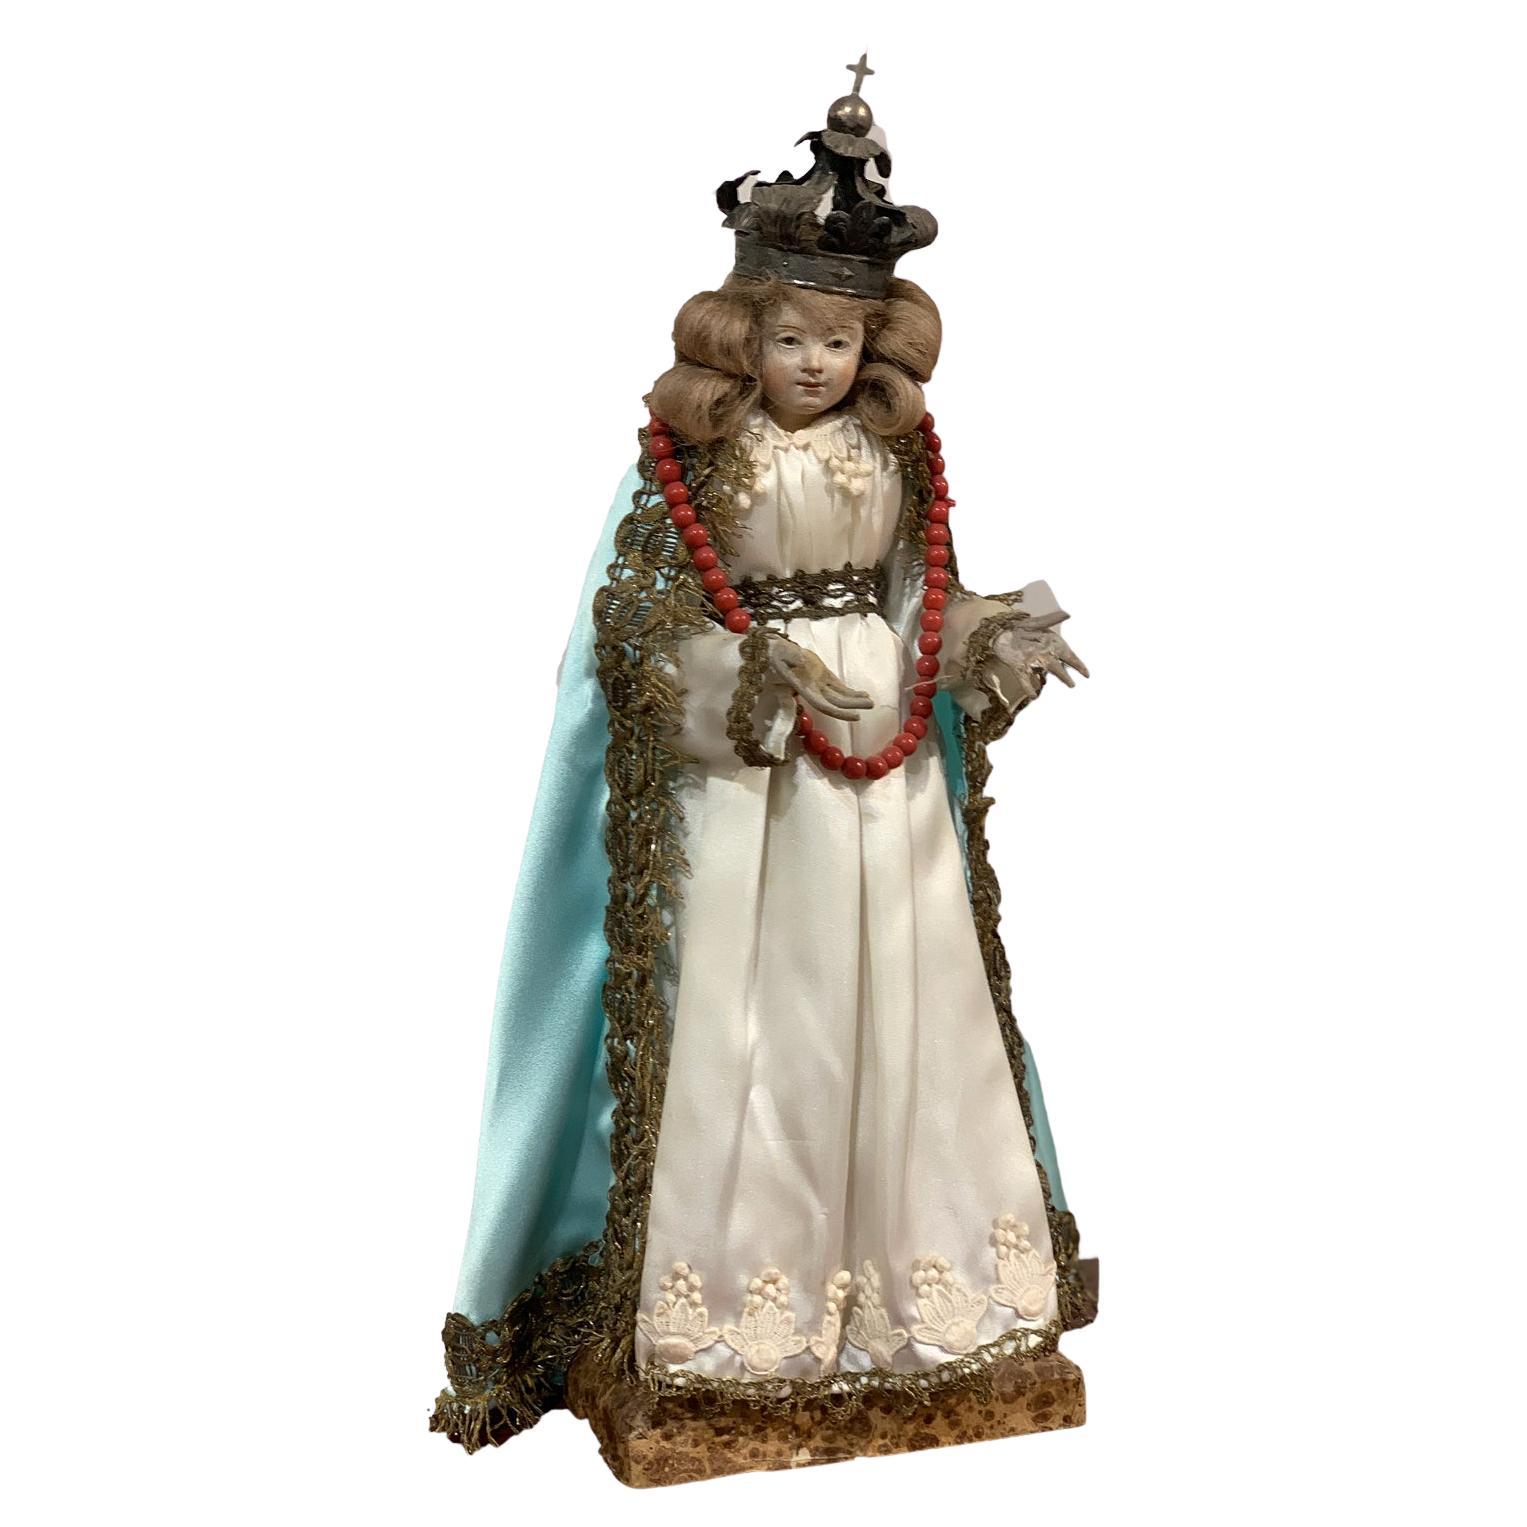 Fin du XVIIIe siècle, Vierge votive